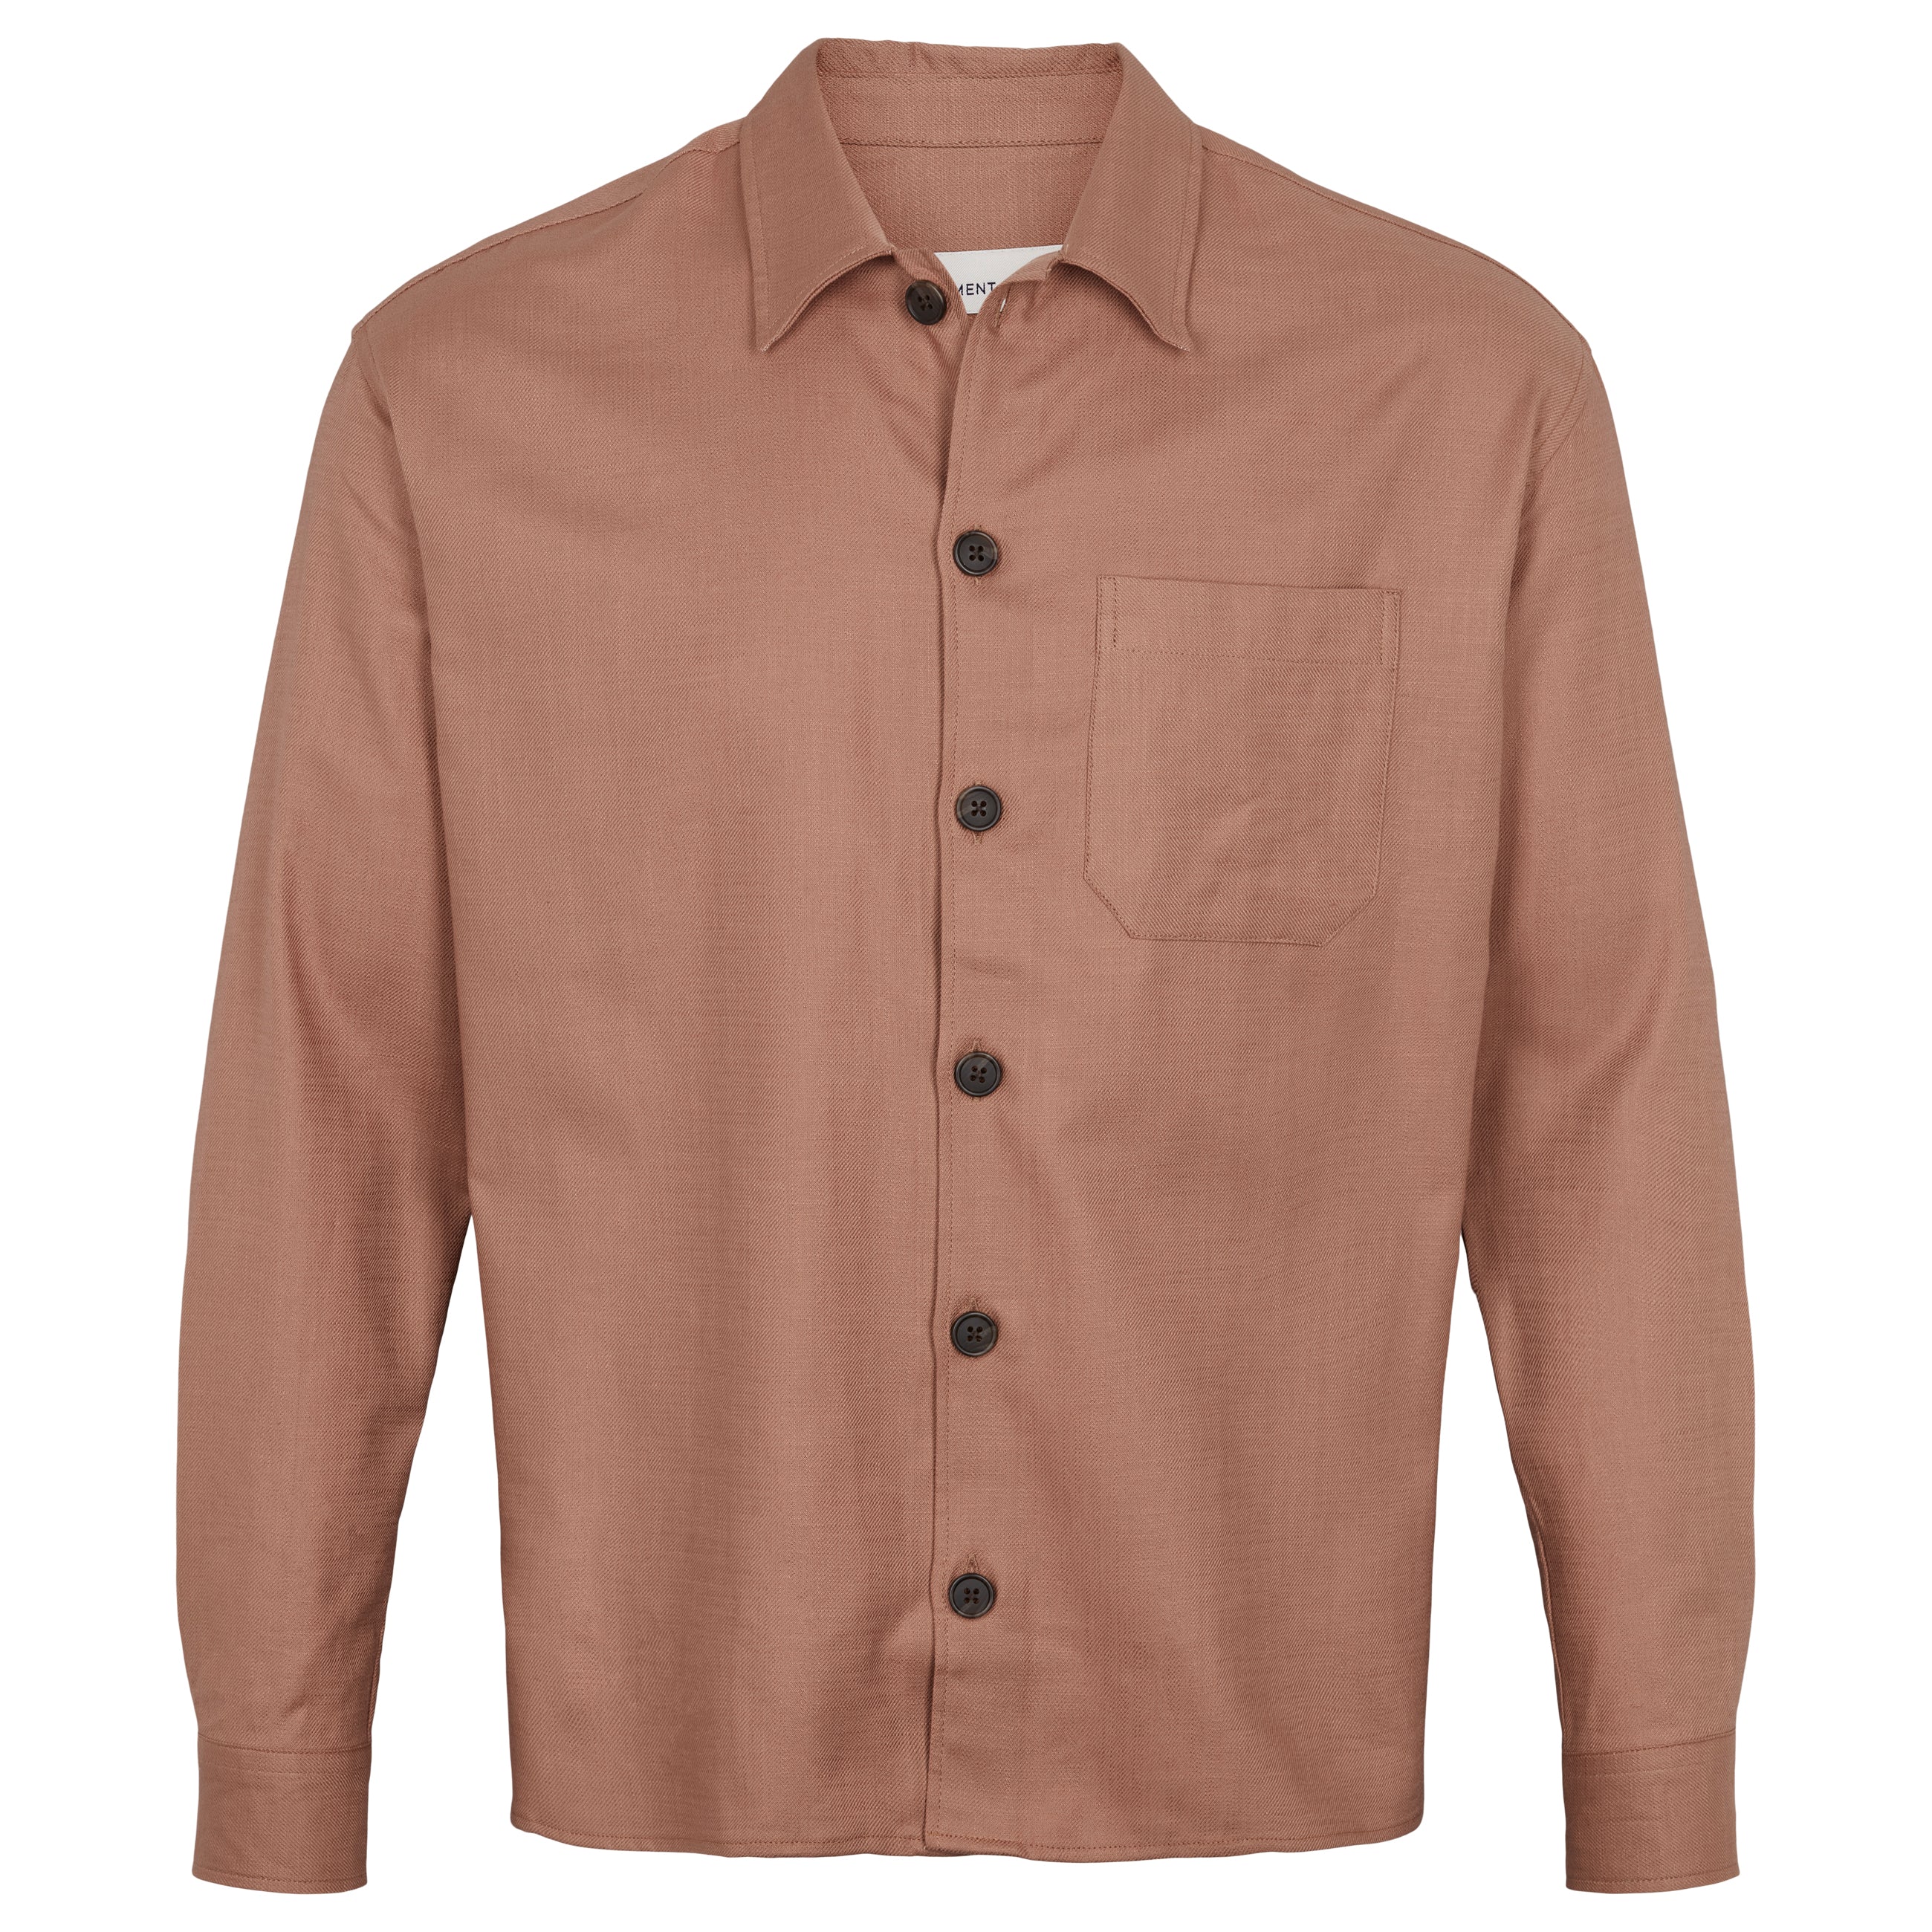 By Garment Makers Storm almindelig Overshirt skjorte LS 1530 Hazelnut